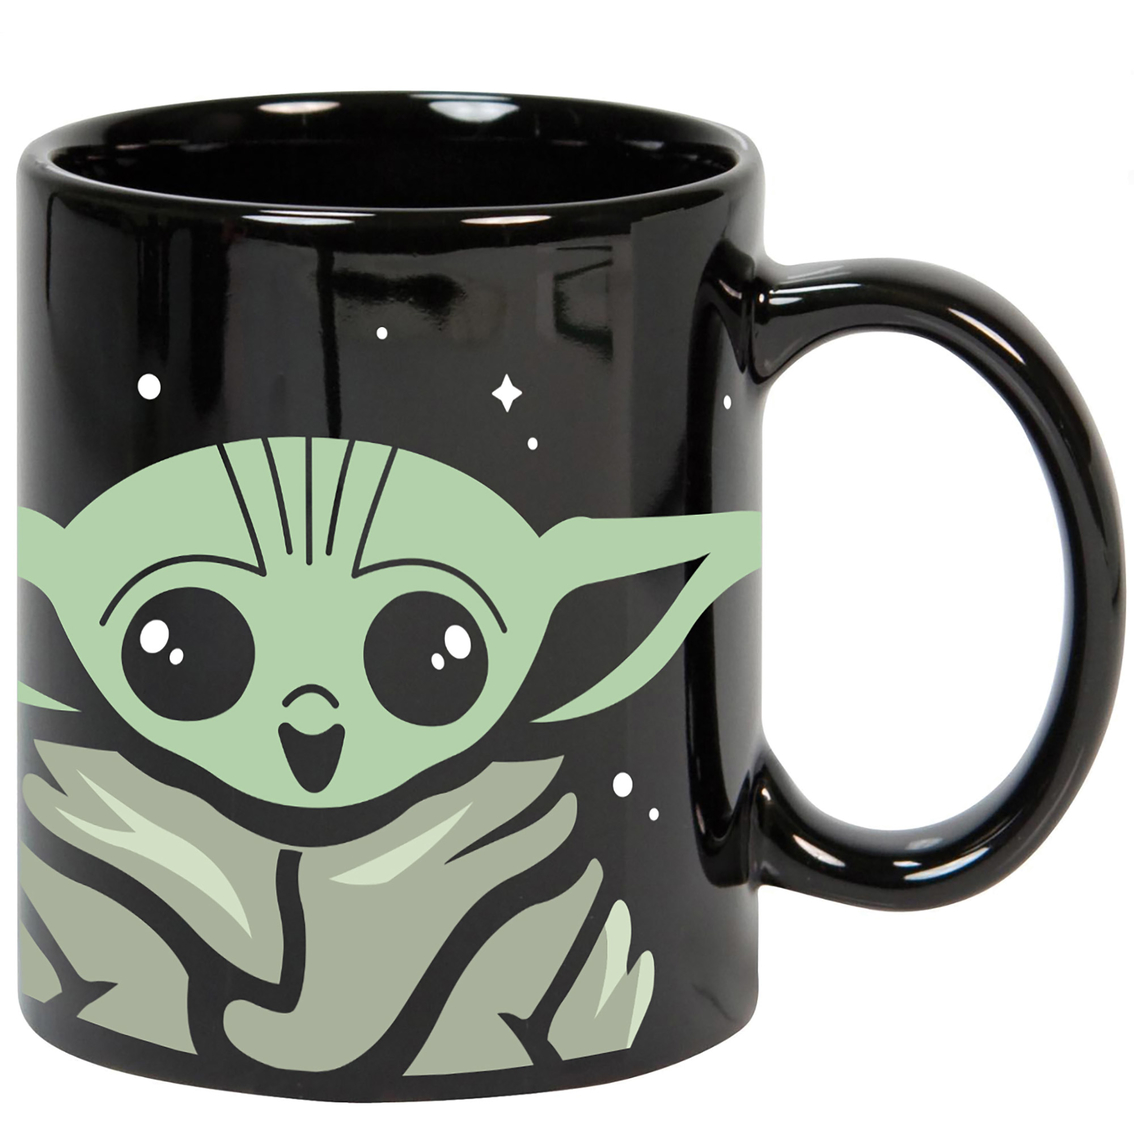 Star Wars The Mandalorian & Baby Yoda Coffee Maker Set